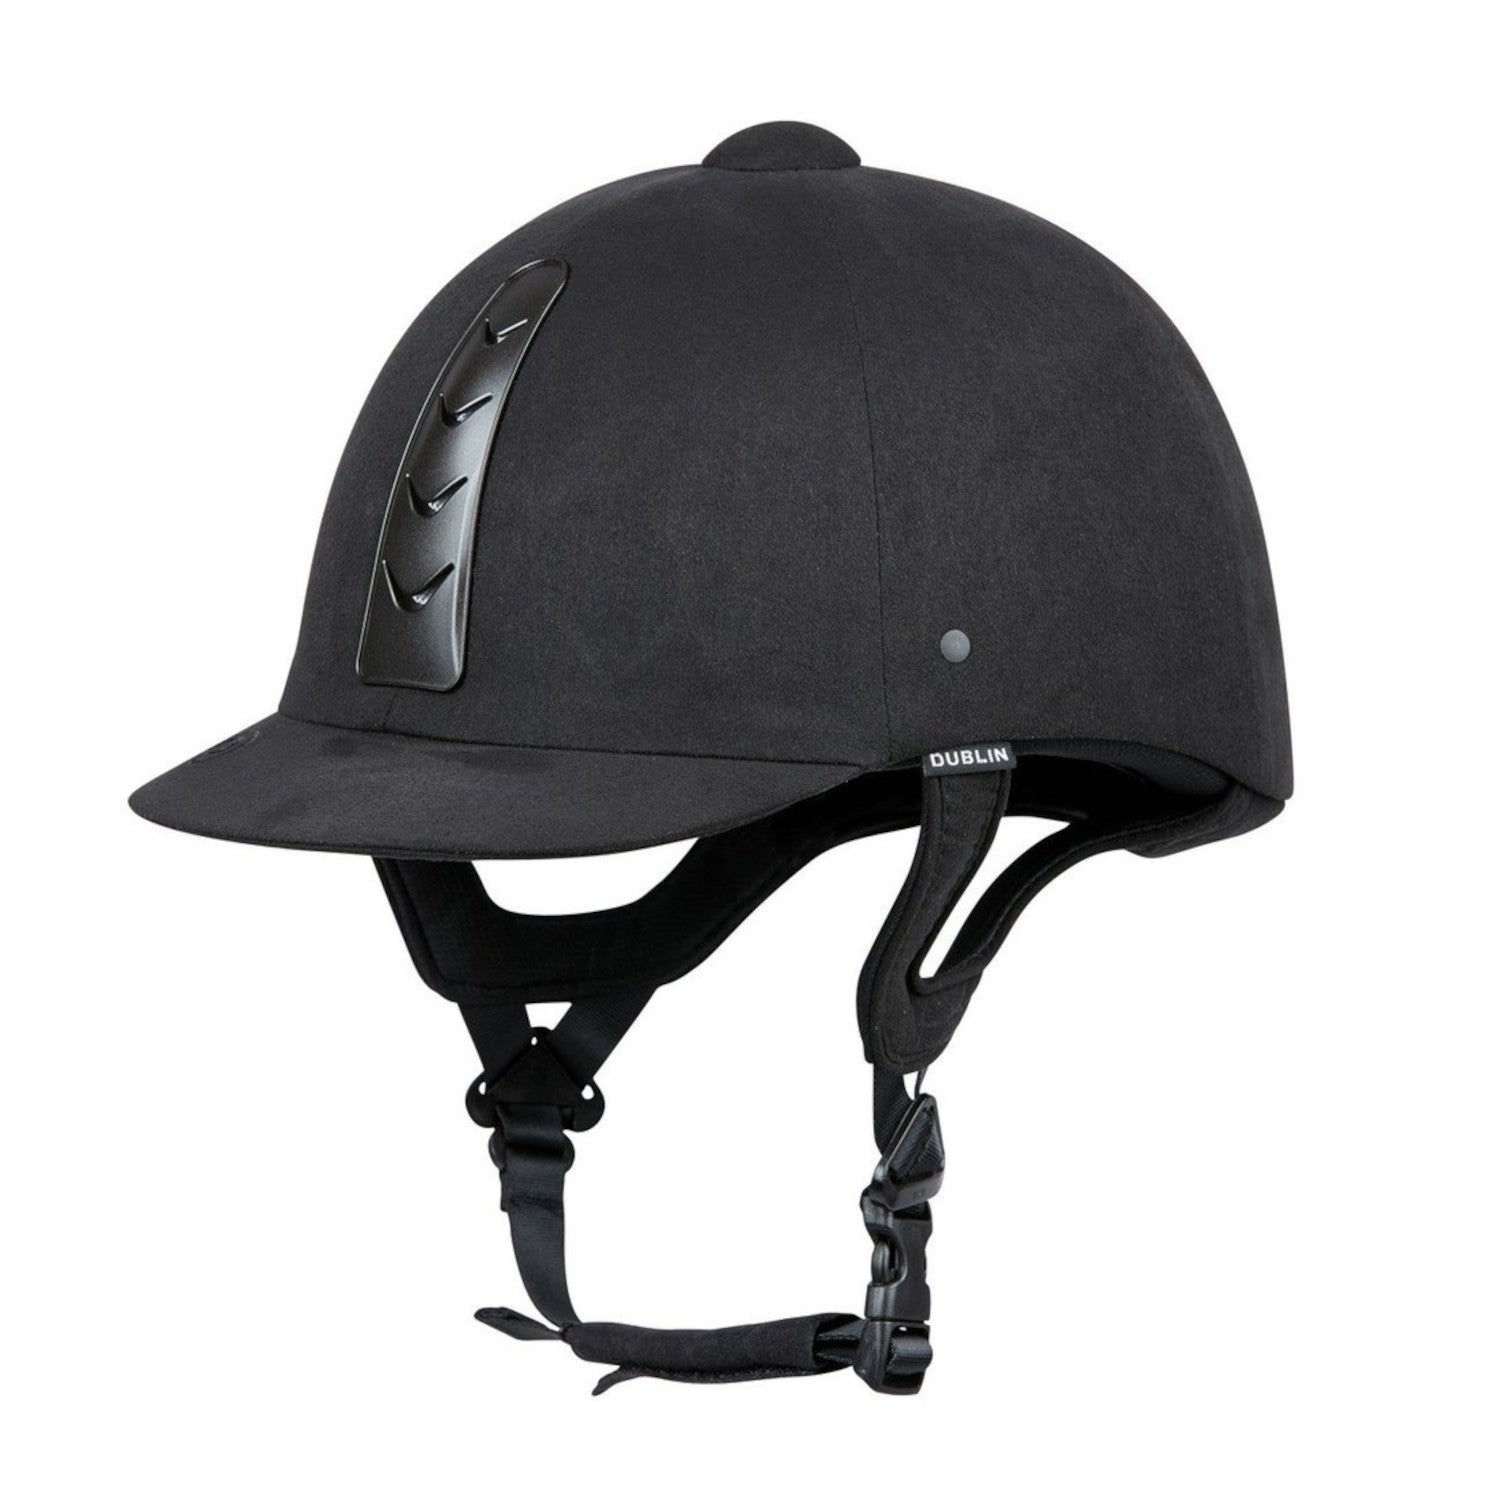 Dublin Silverline Black Helmet